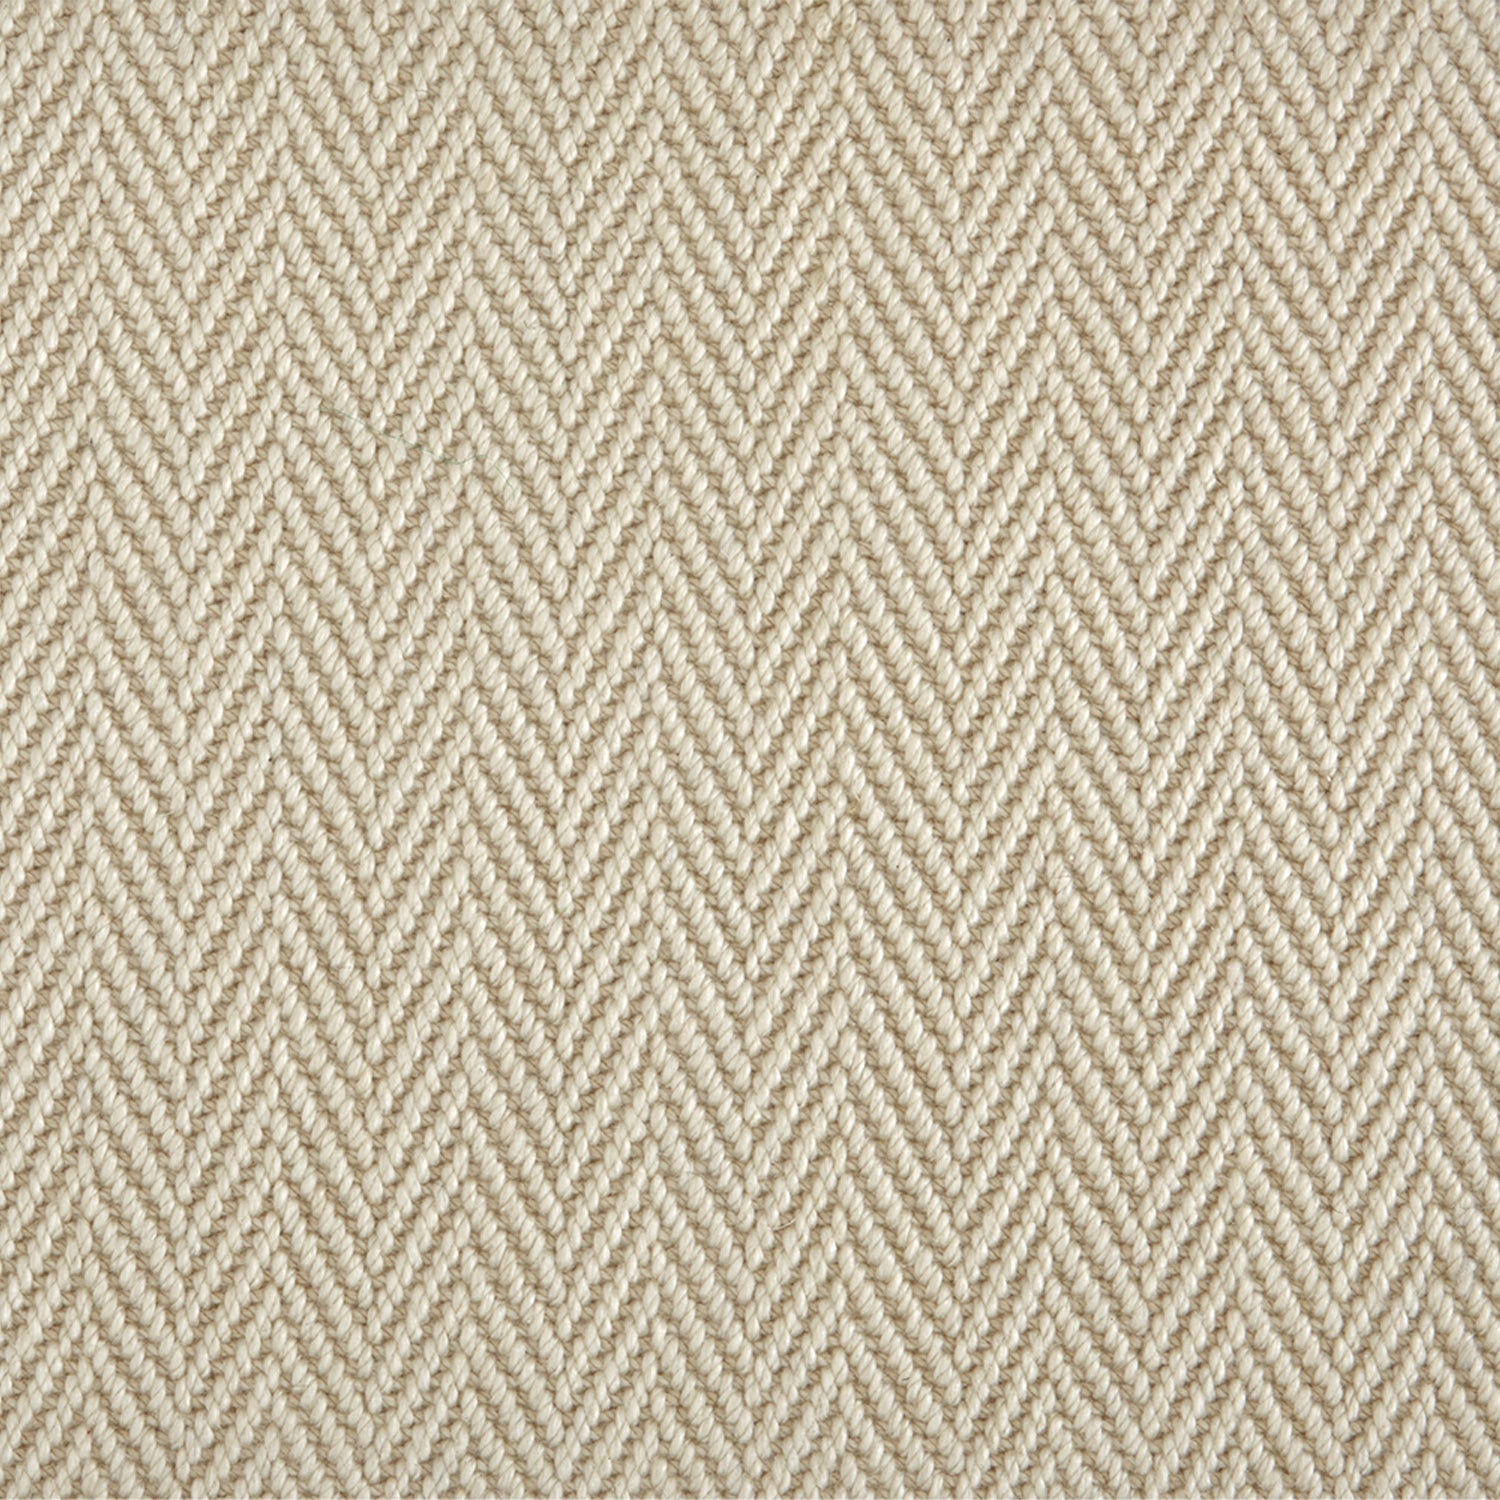 Nylon broadloom carpet swatch in a textured herringbone weave in tan.